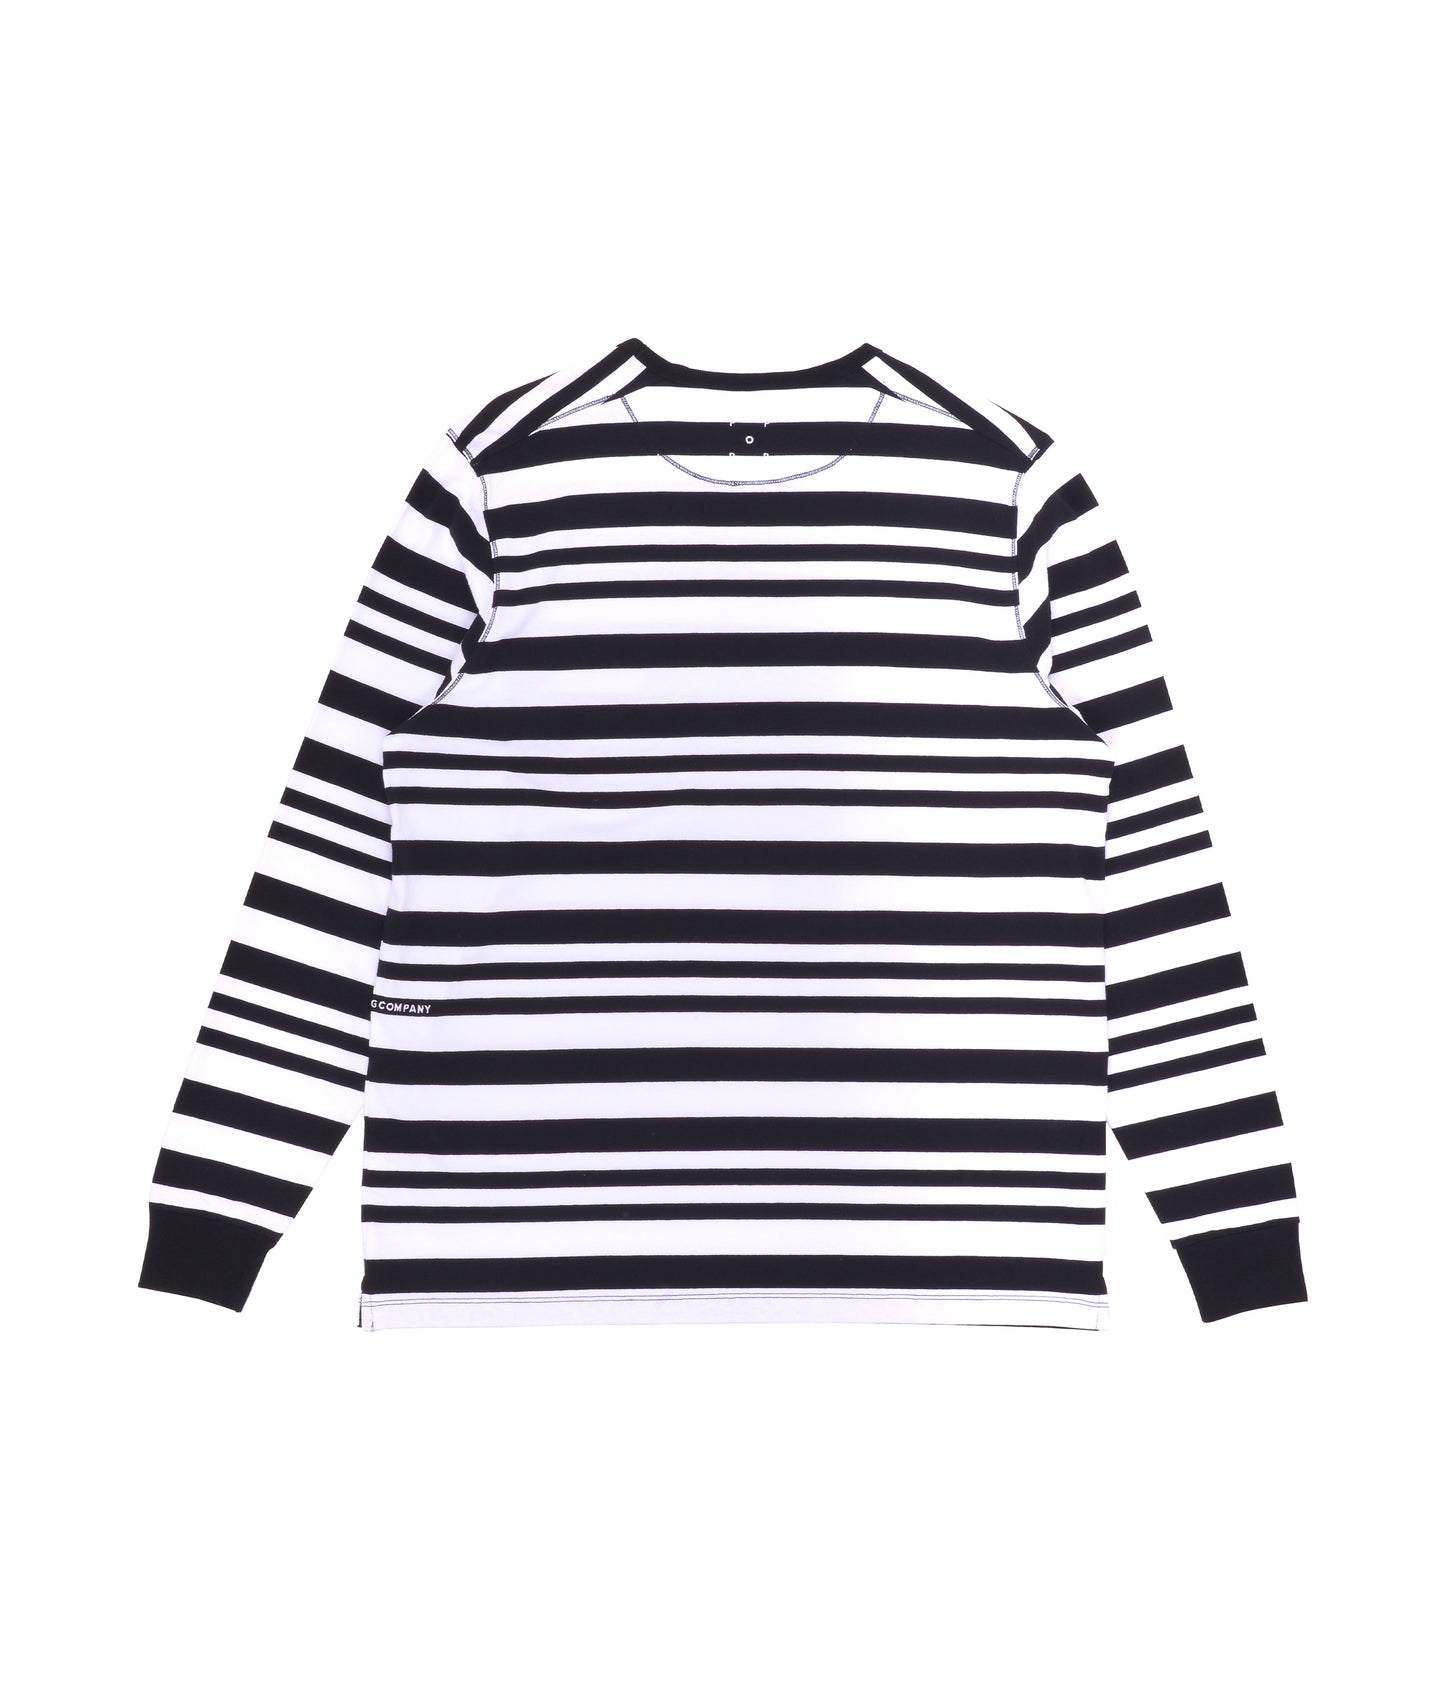 POP Big P Striped Longsleeve T-Shirt Black/White